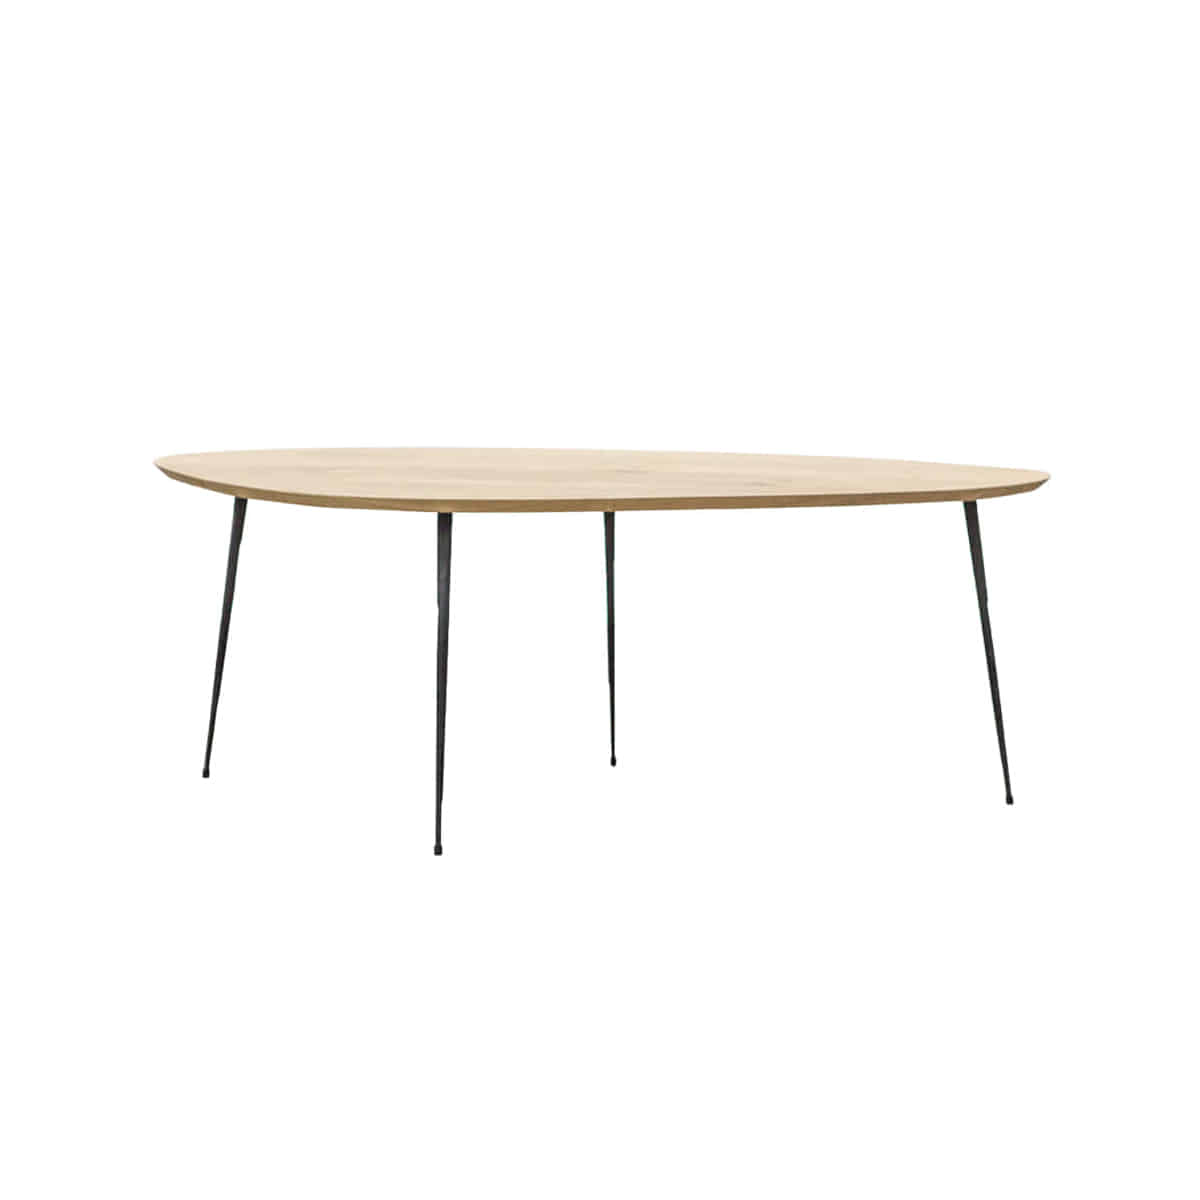 ETHNICRAFT Oak Pebble Coffee Table - Hesse 오크 페블 커피 테이블 (헤쎄 - 중)DESIGNED  BY BELGIUM